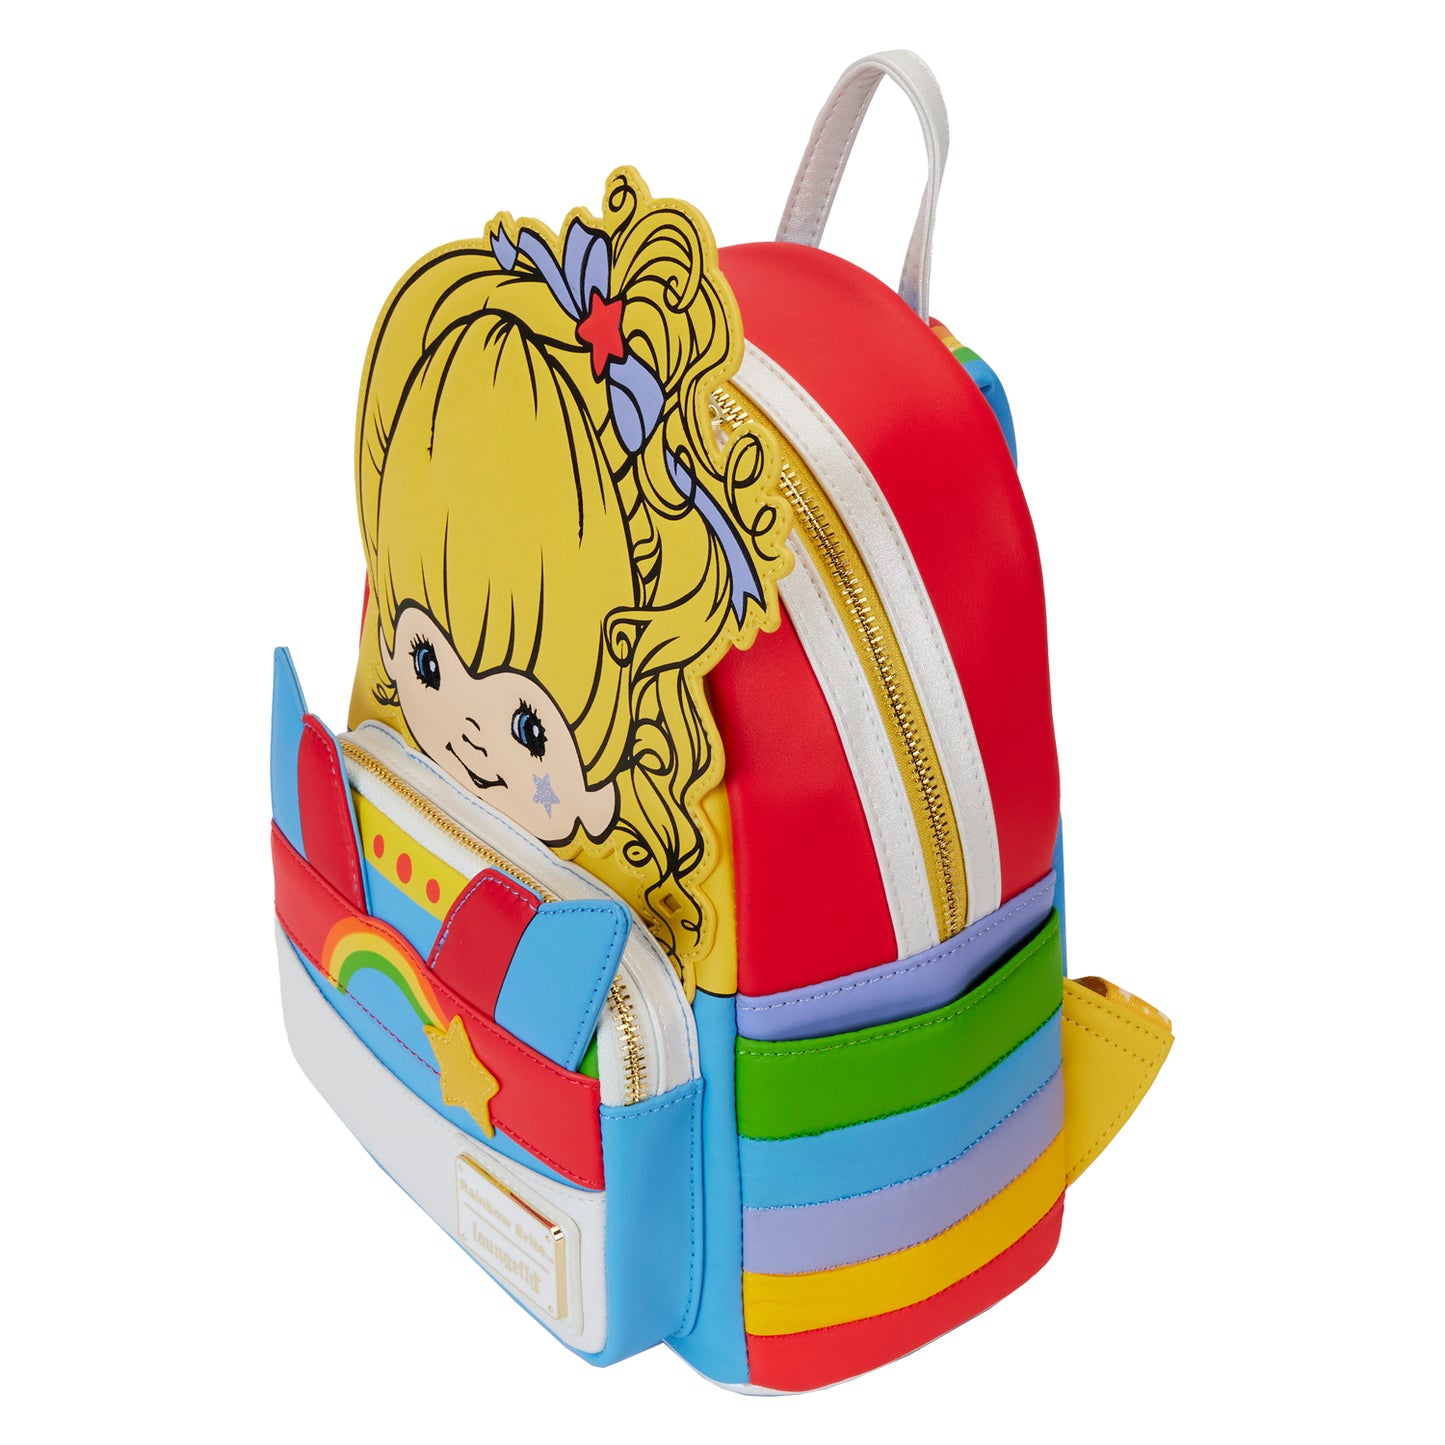 Rainbow Brite™ Cosplay Mini Backpack - **PREORDER**